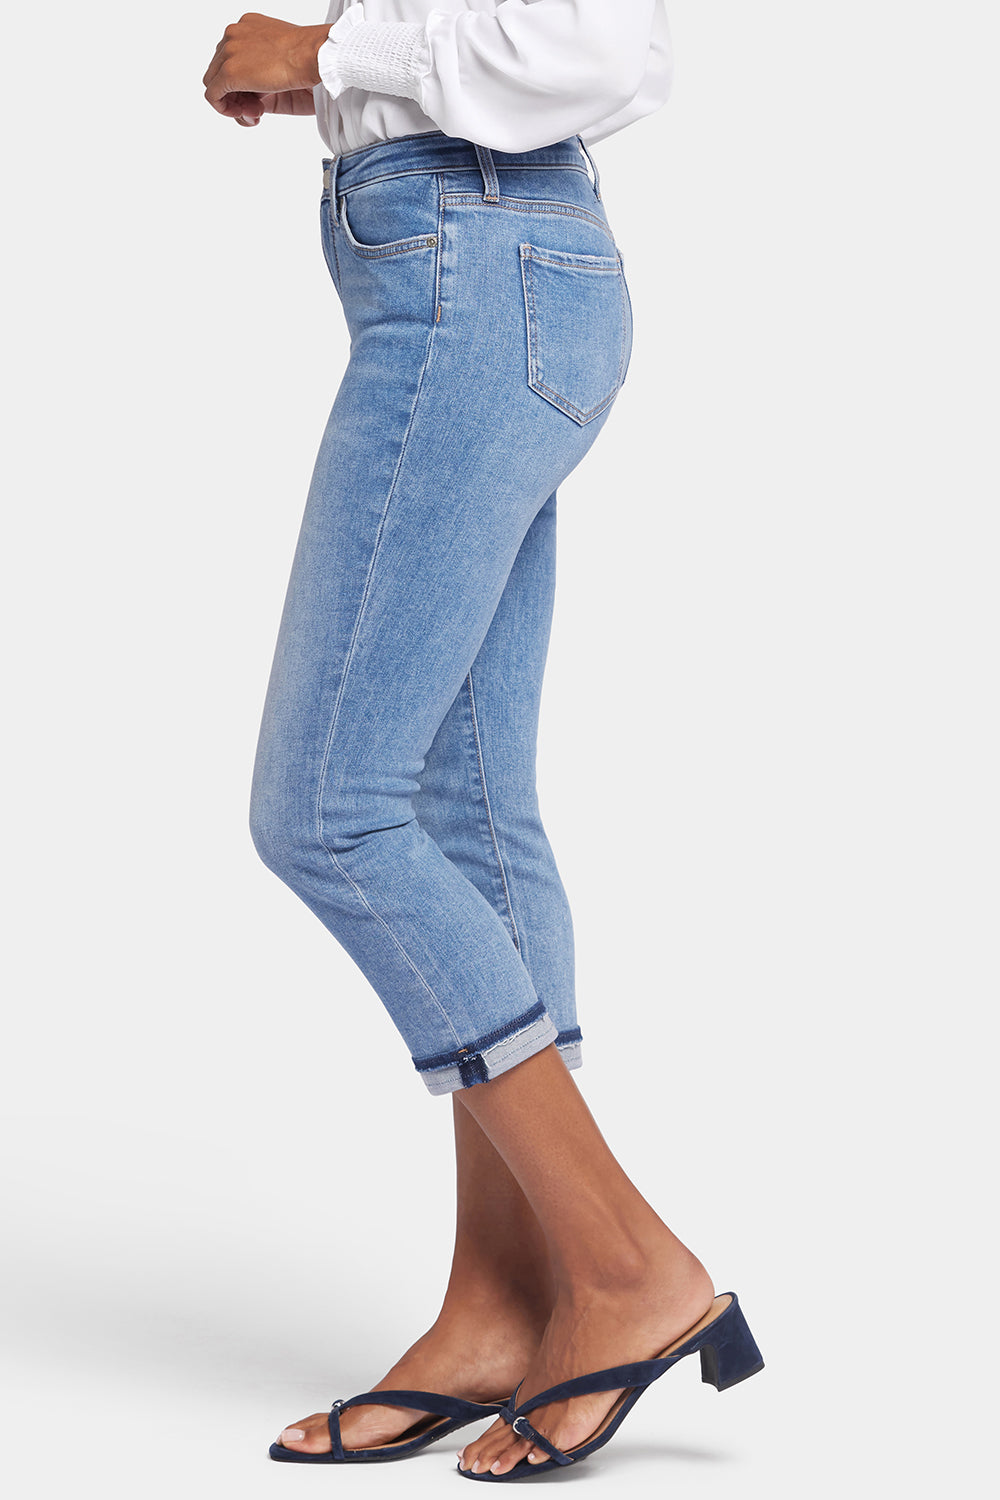 NYDJ Chloe Capri Jeans With Raw Shadow Cuffs - Crescent Shore